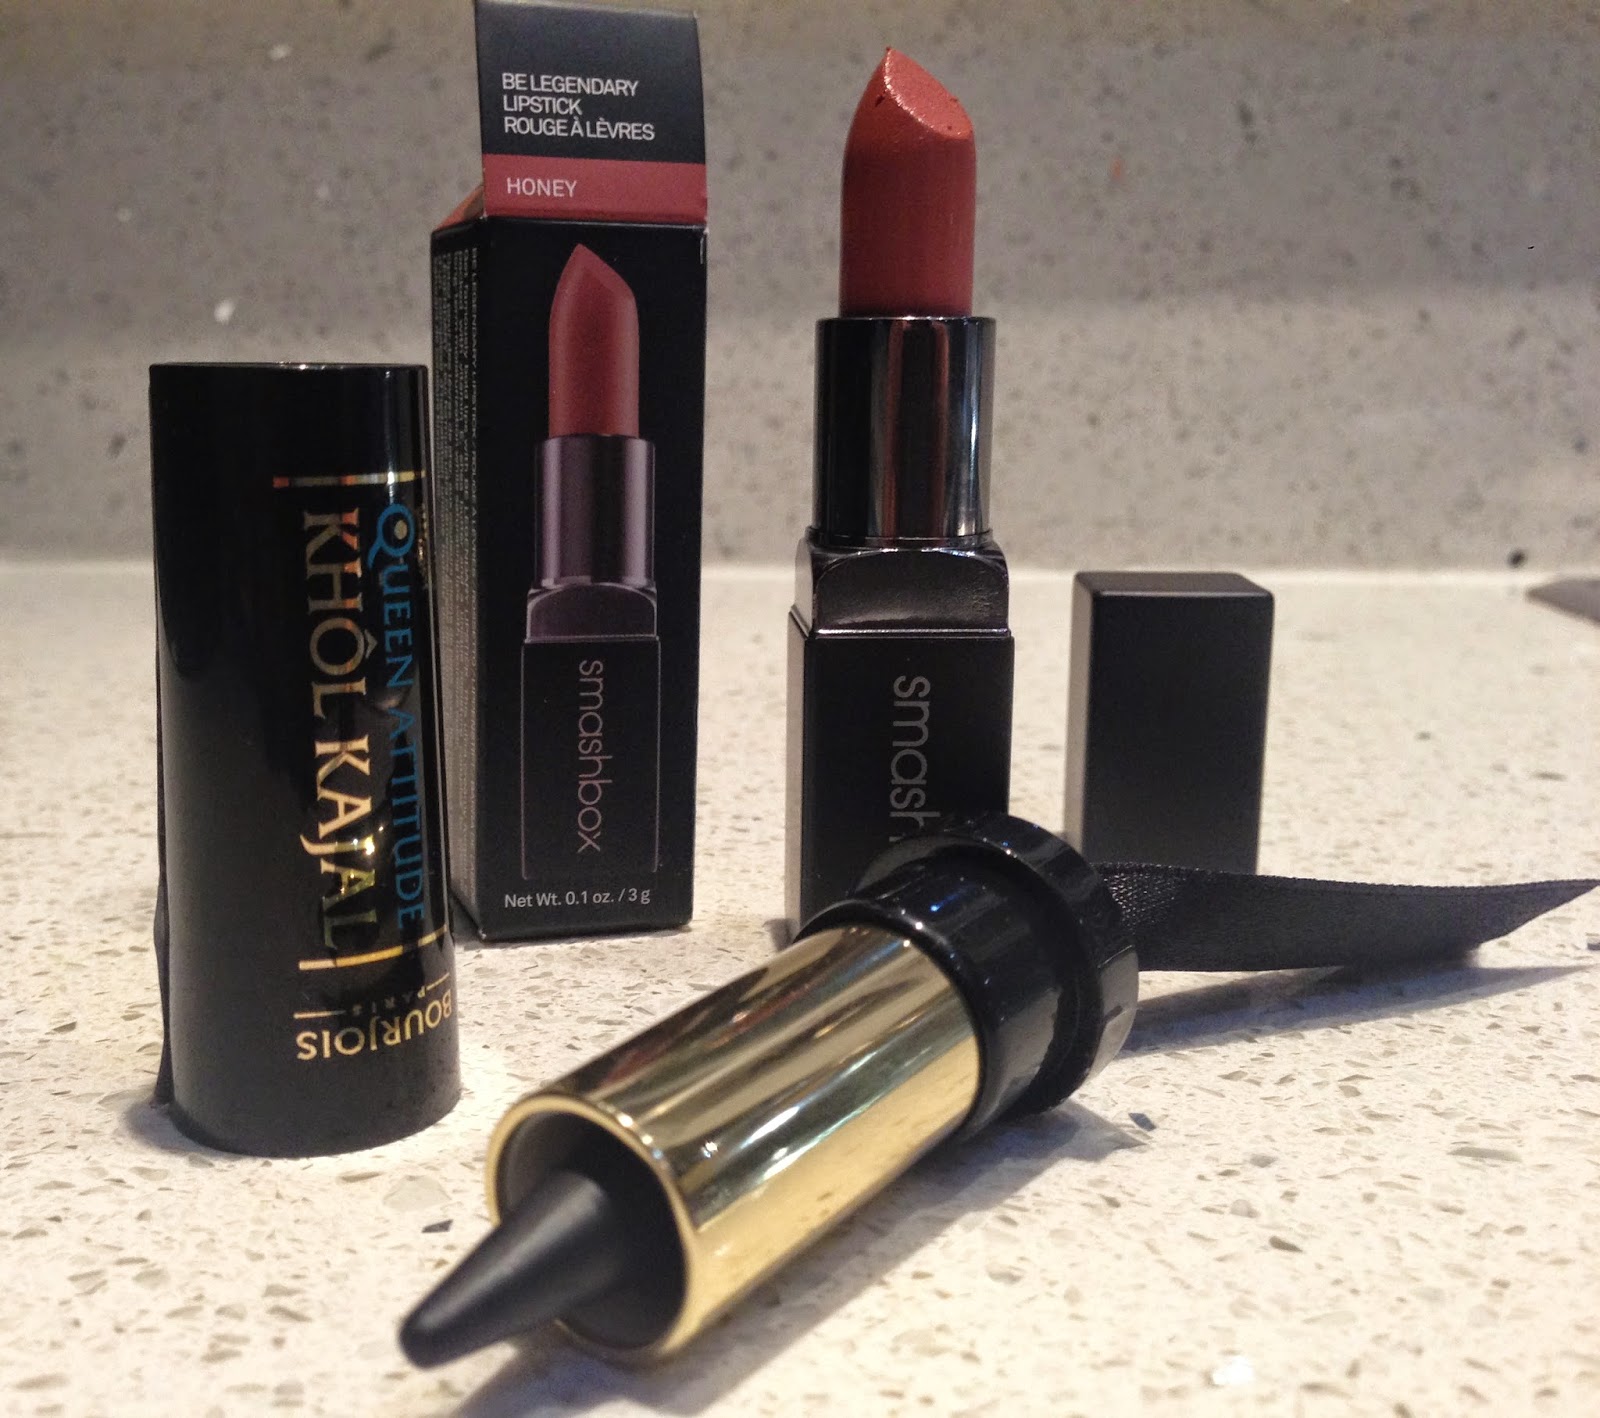 City chic Lifestyle: The Perfect Companions: Smashbox lipstick and ...